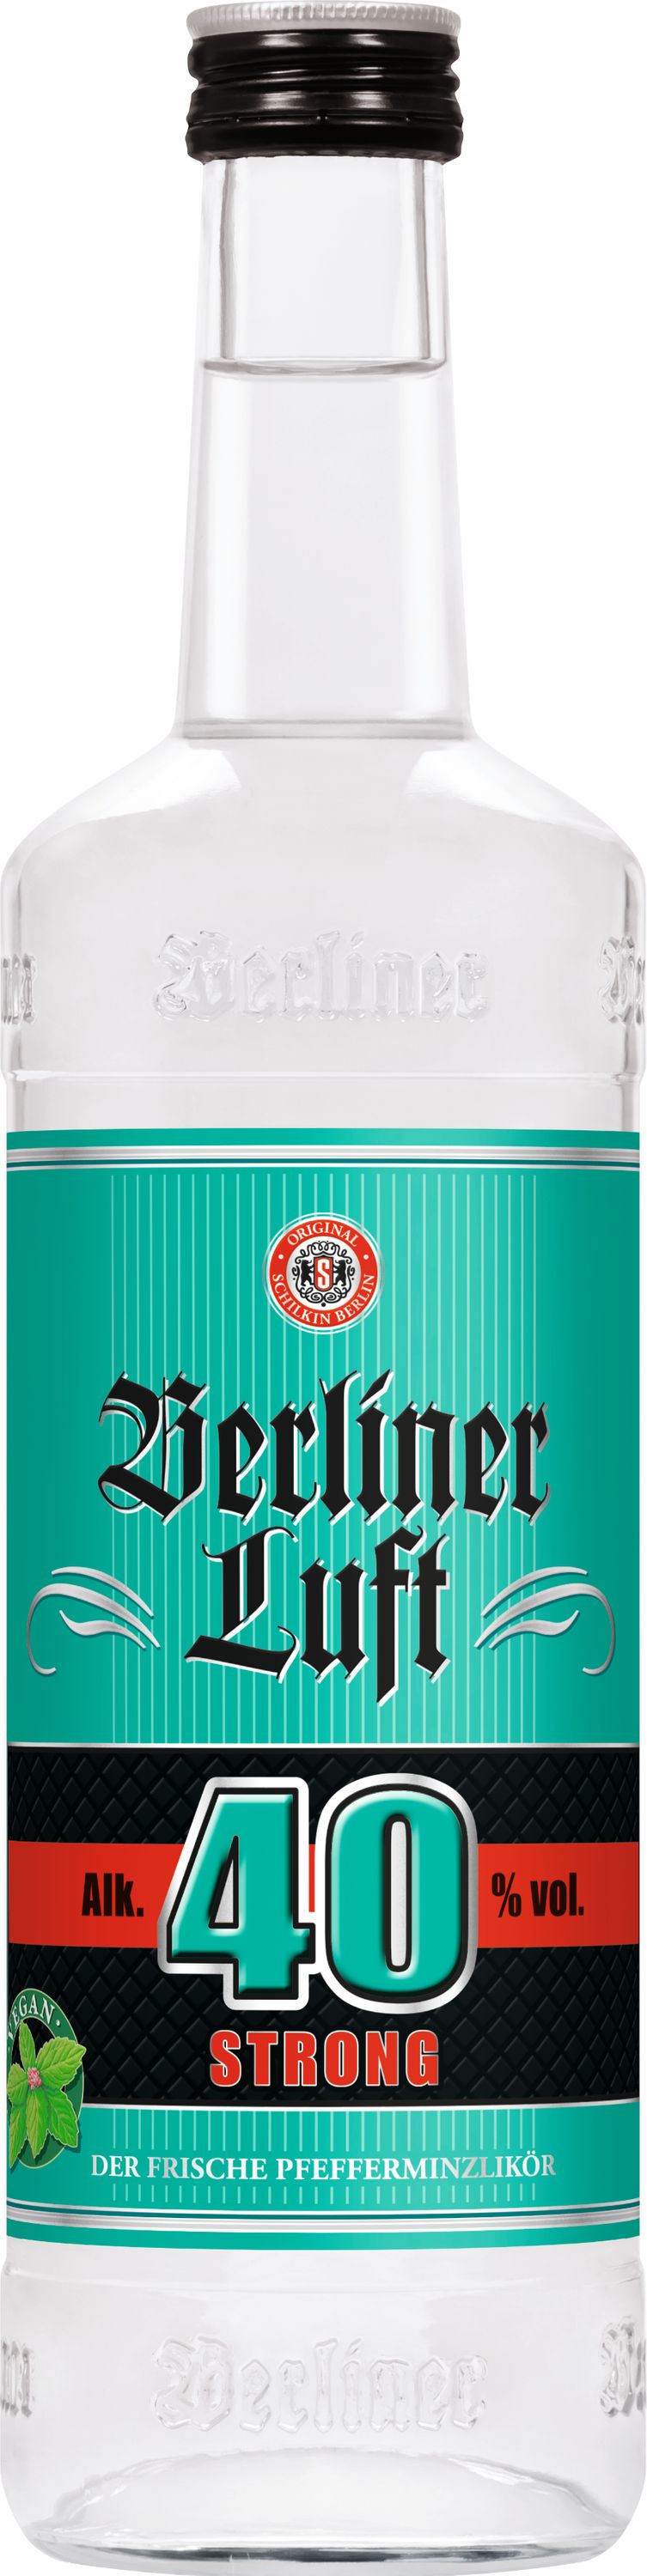 Berliner Luft Strong Pfefferminzlikör, 0,7l, alc. 40 Vol.-%